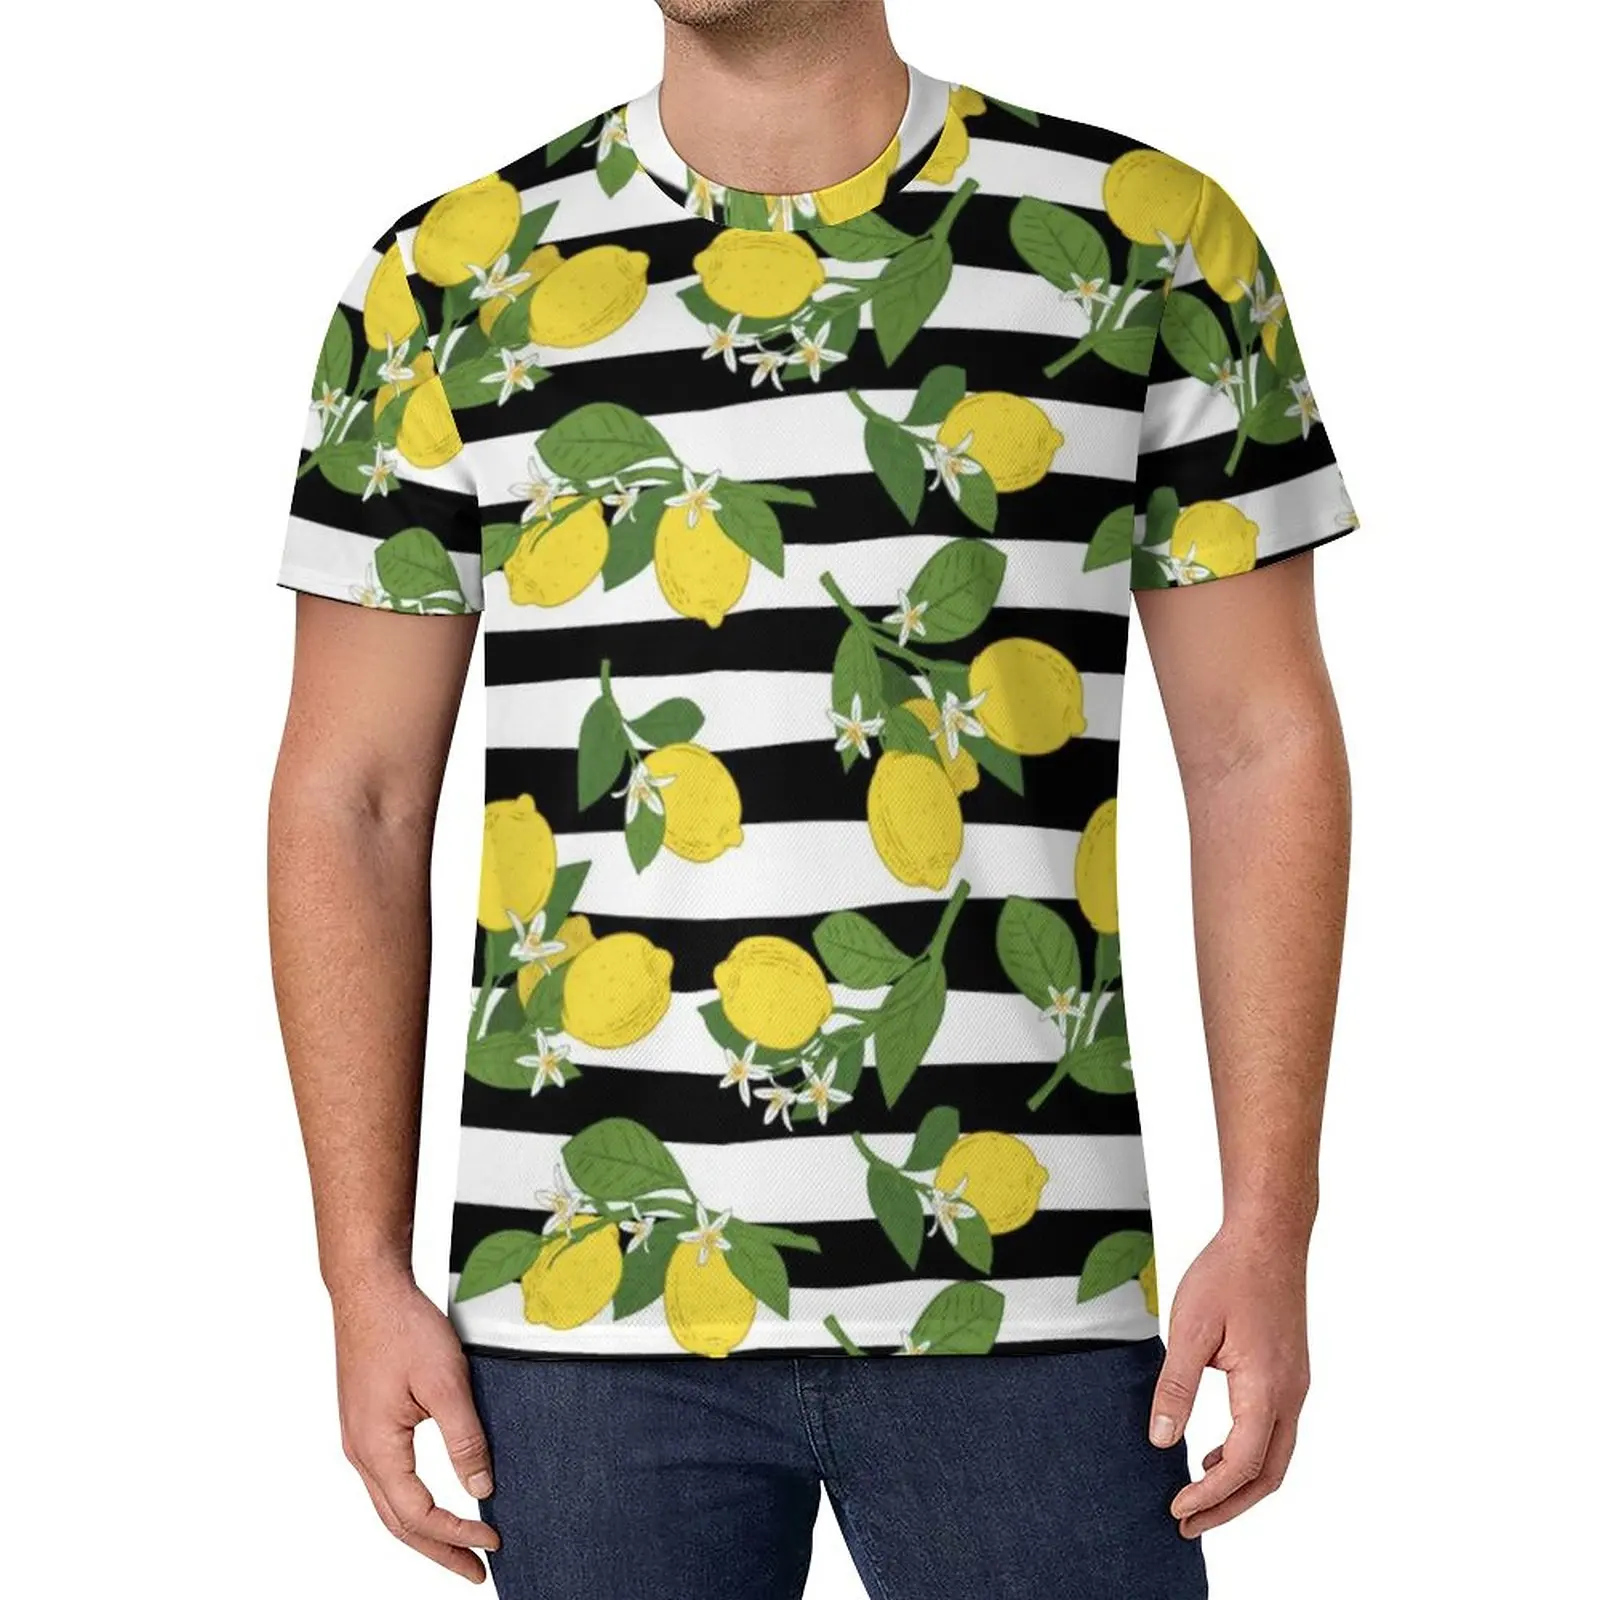 

Lemon Lemons Yellow T Shirt Man Black And White Stripes Kawaii T Shirts Beach Vintage Tee Shirt Design Big Size Tops